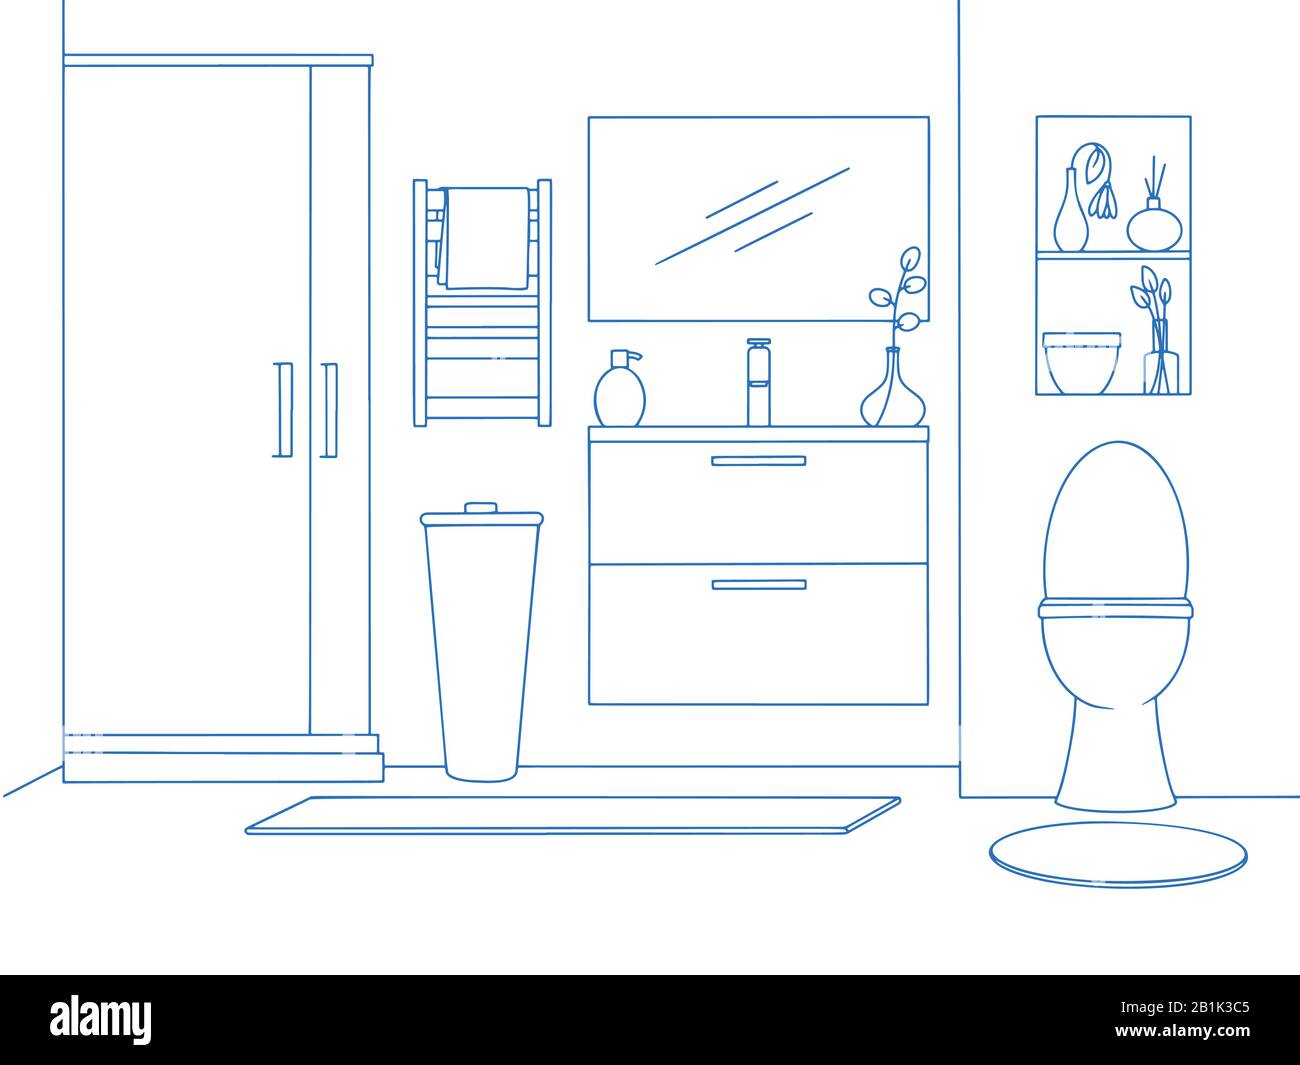 Hand drawn bathroom interior. Sketch bathtubs and other bathroom items. Vector illustration in sketch style. Stock Vector